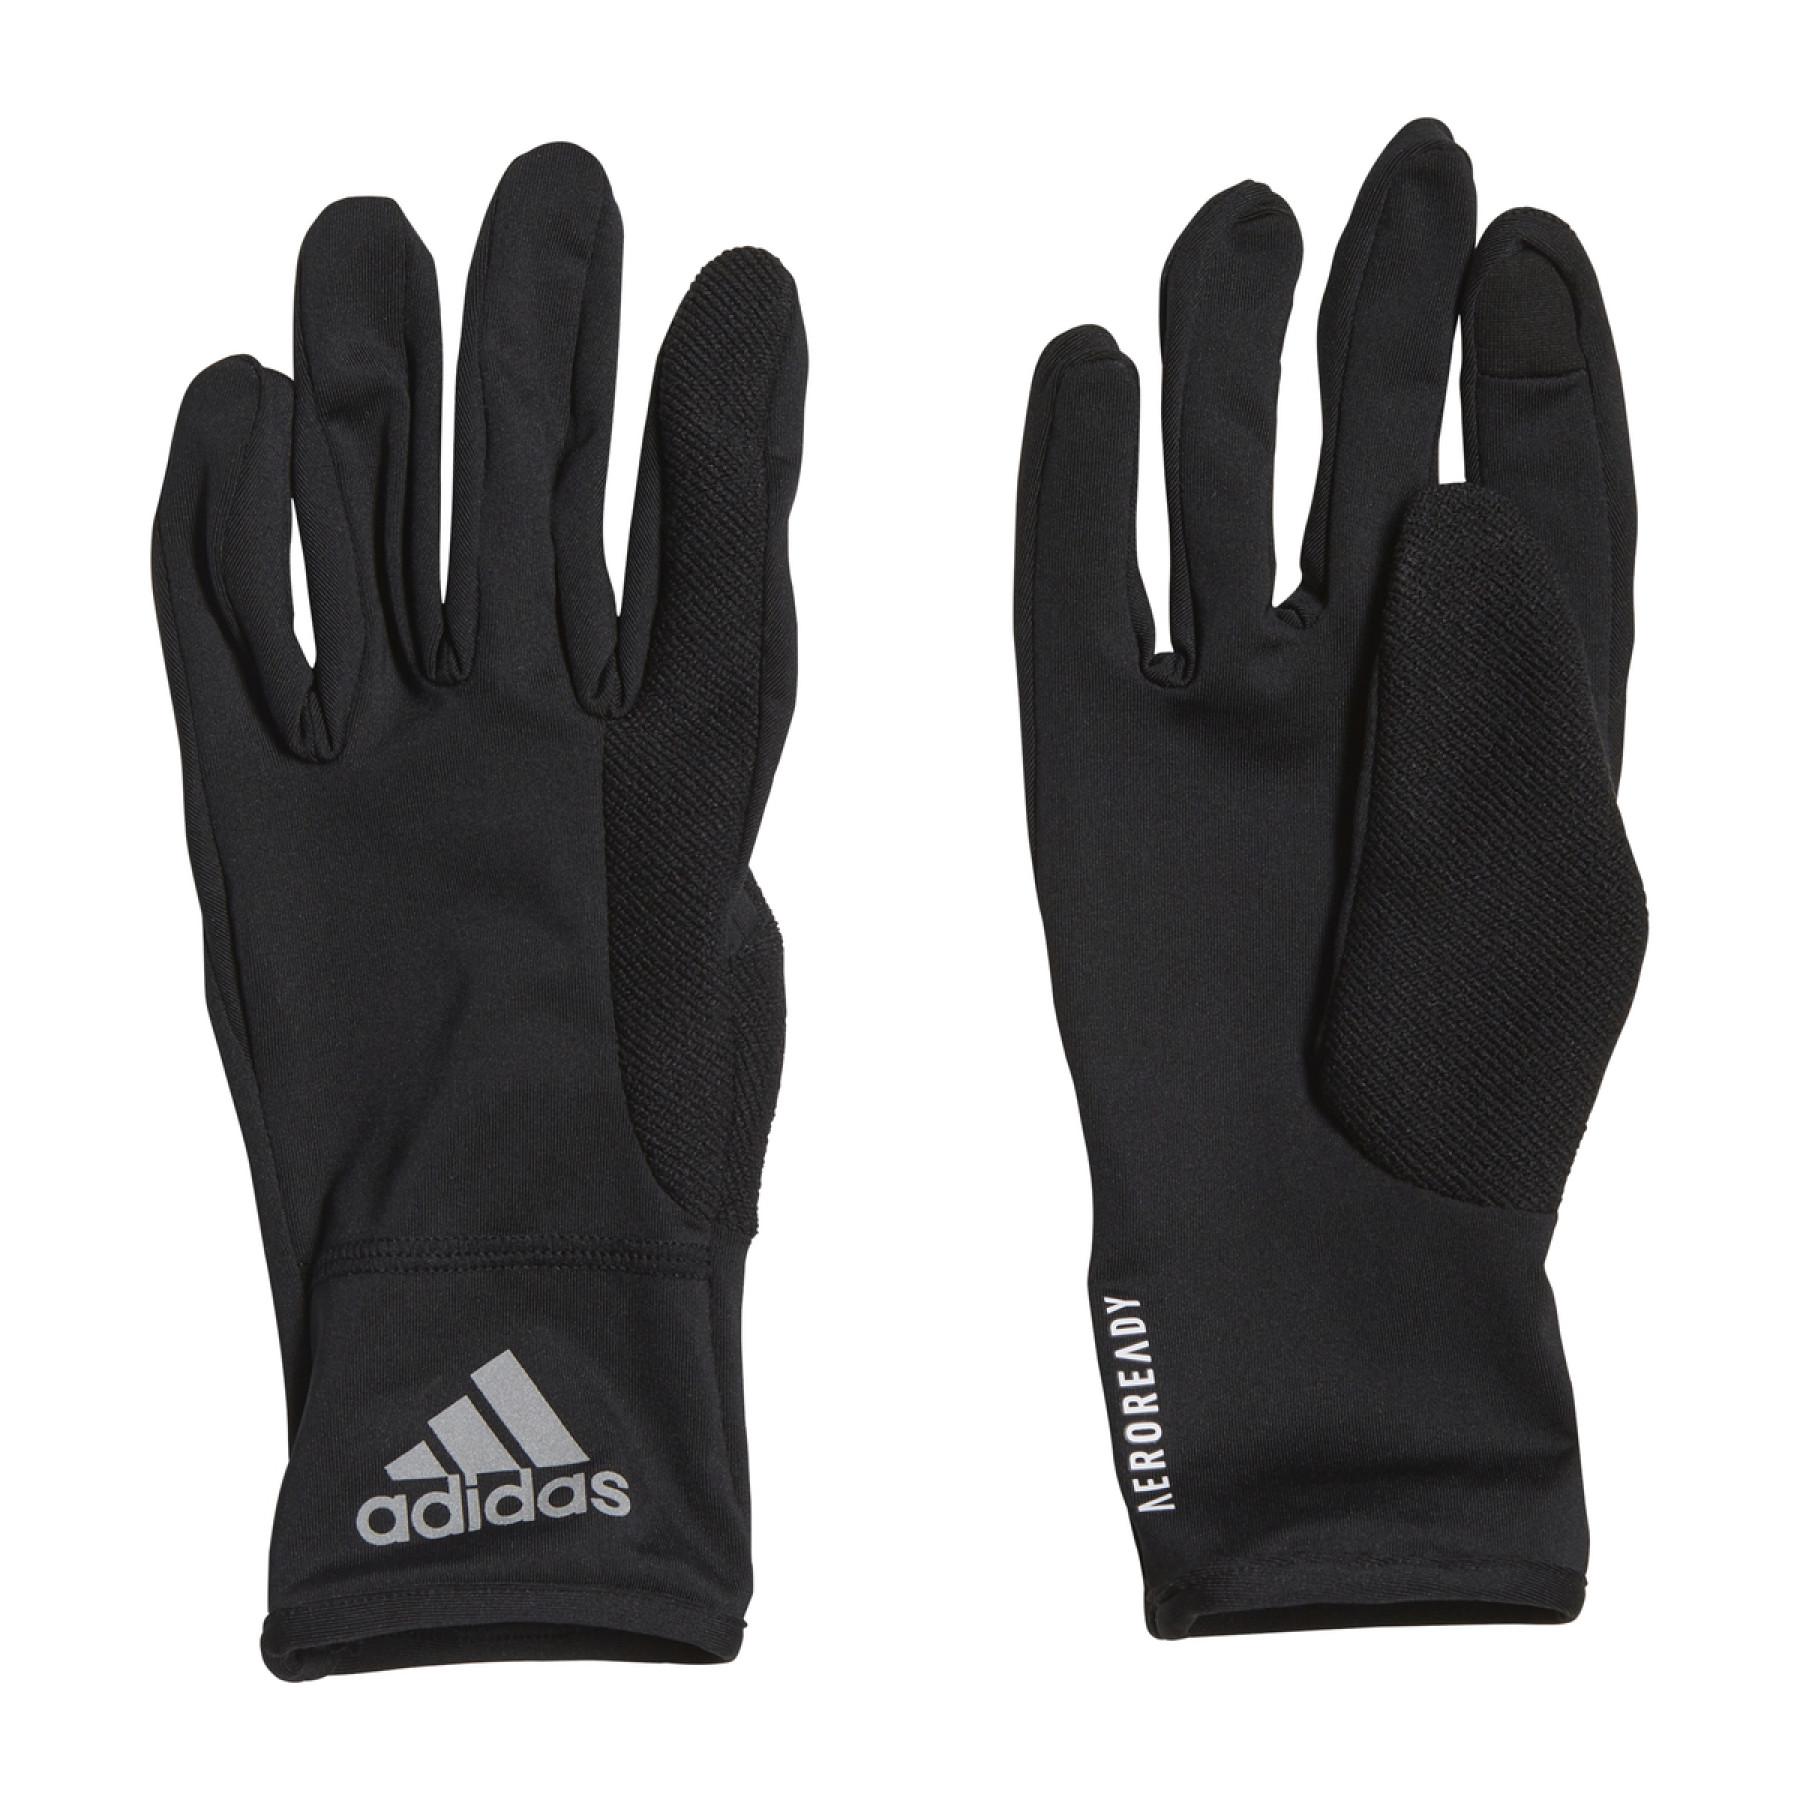 Goalkeeper gloves adidas Aeroready